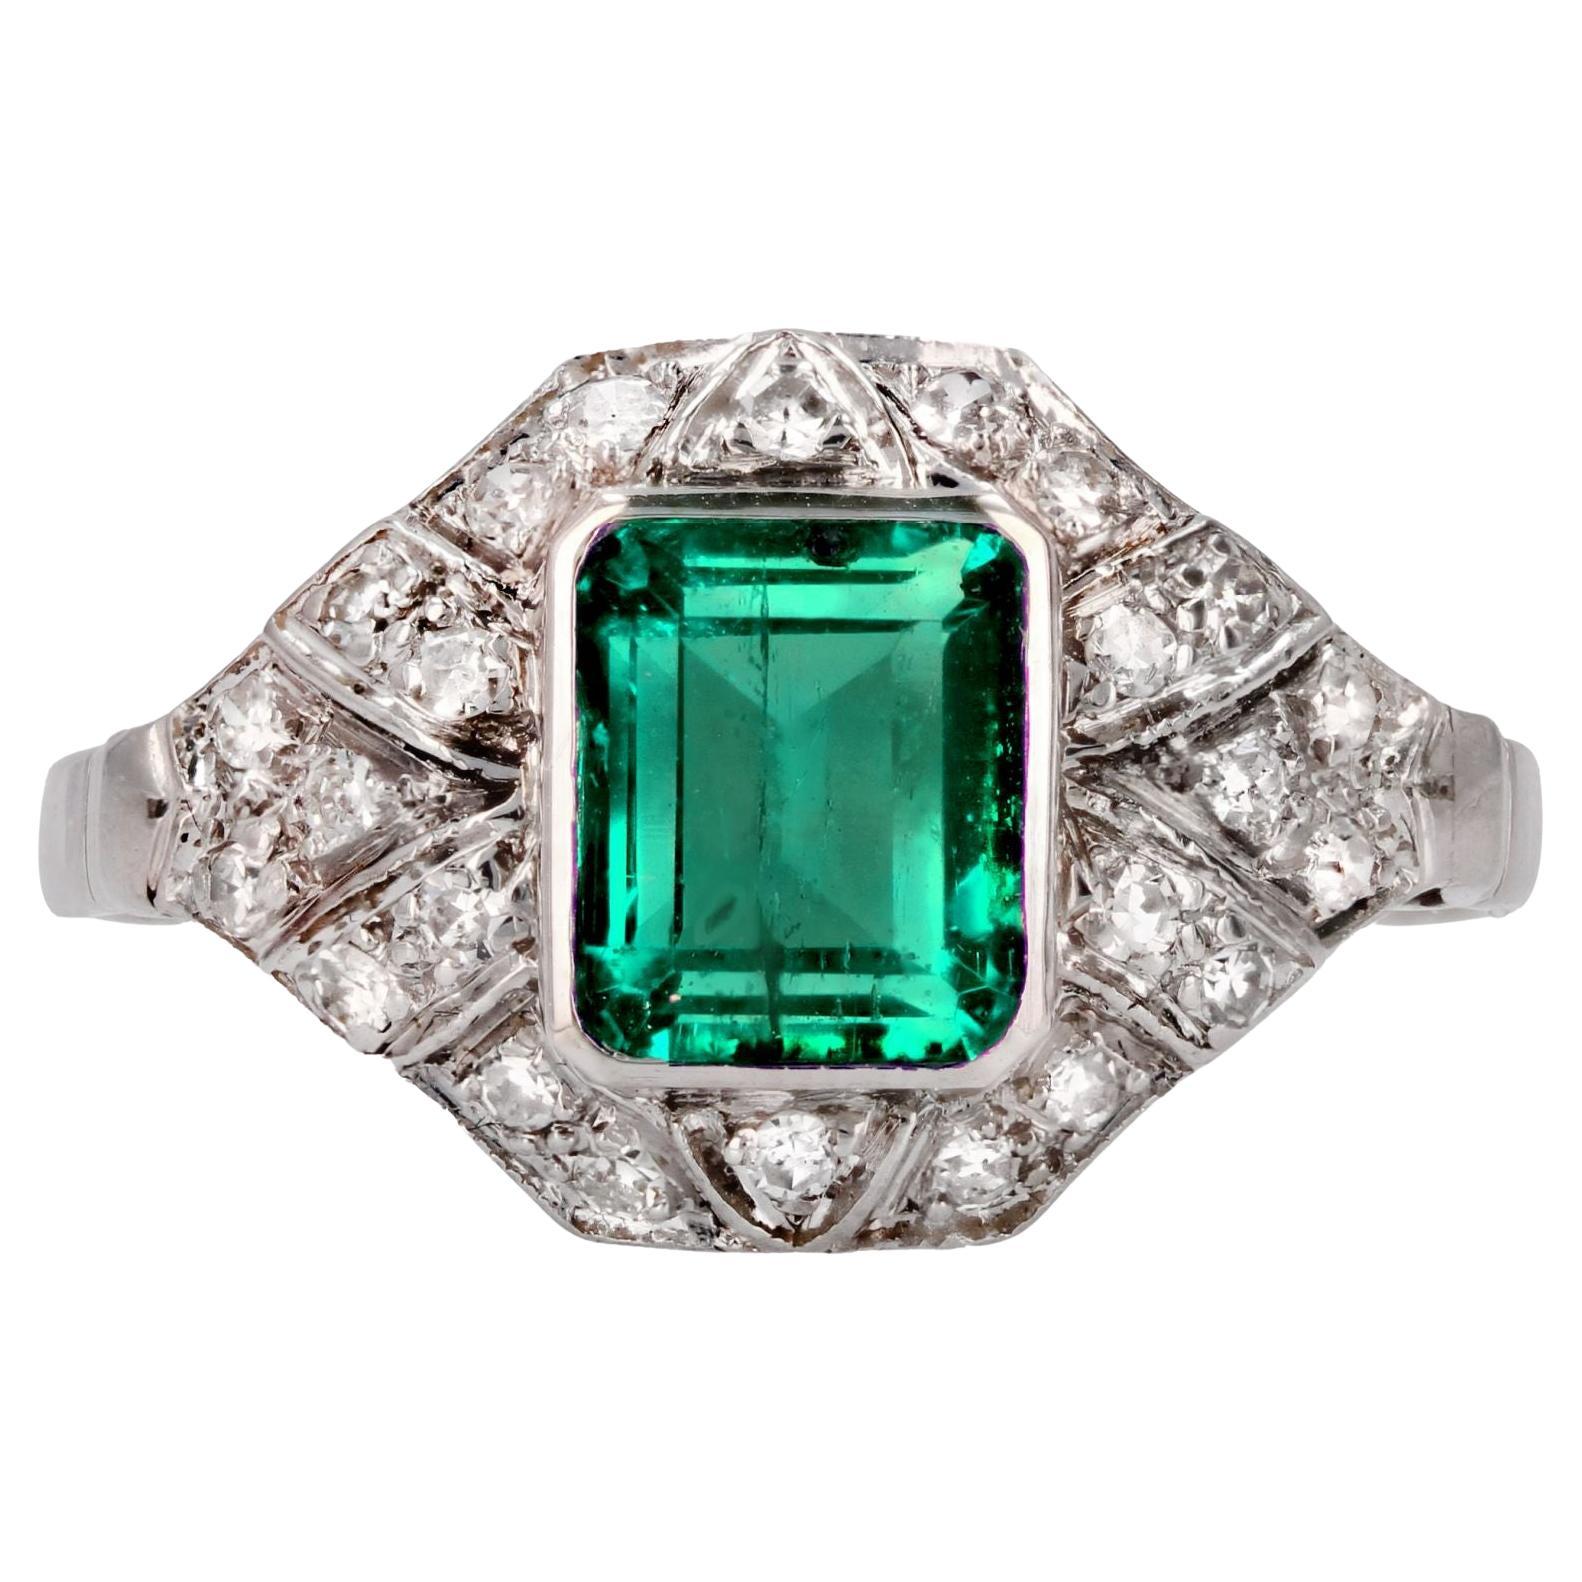 1950s Art Deco Style Emerald Diamonds 18 Karat White Gold Ring